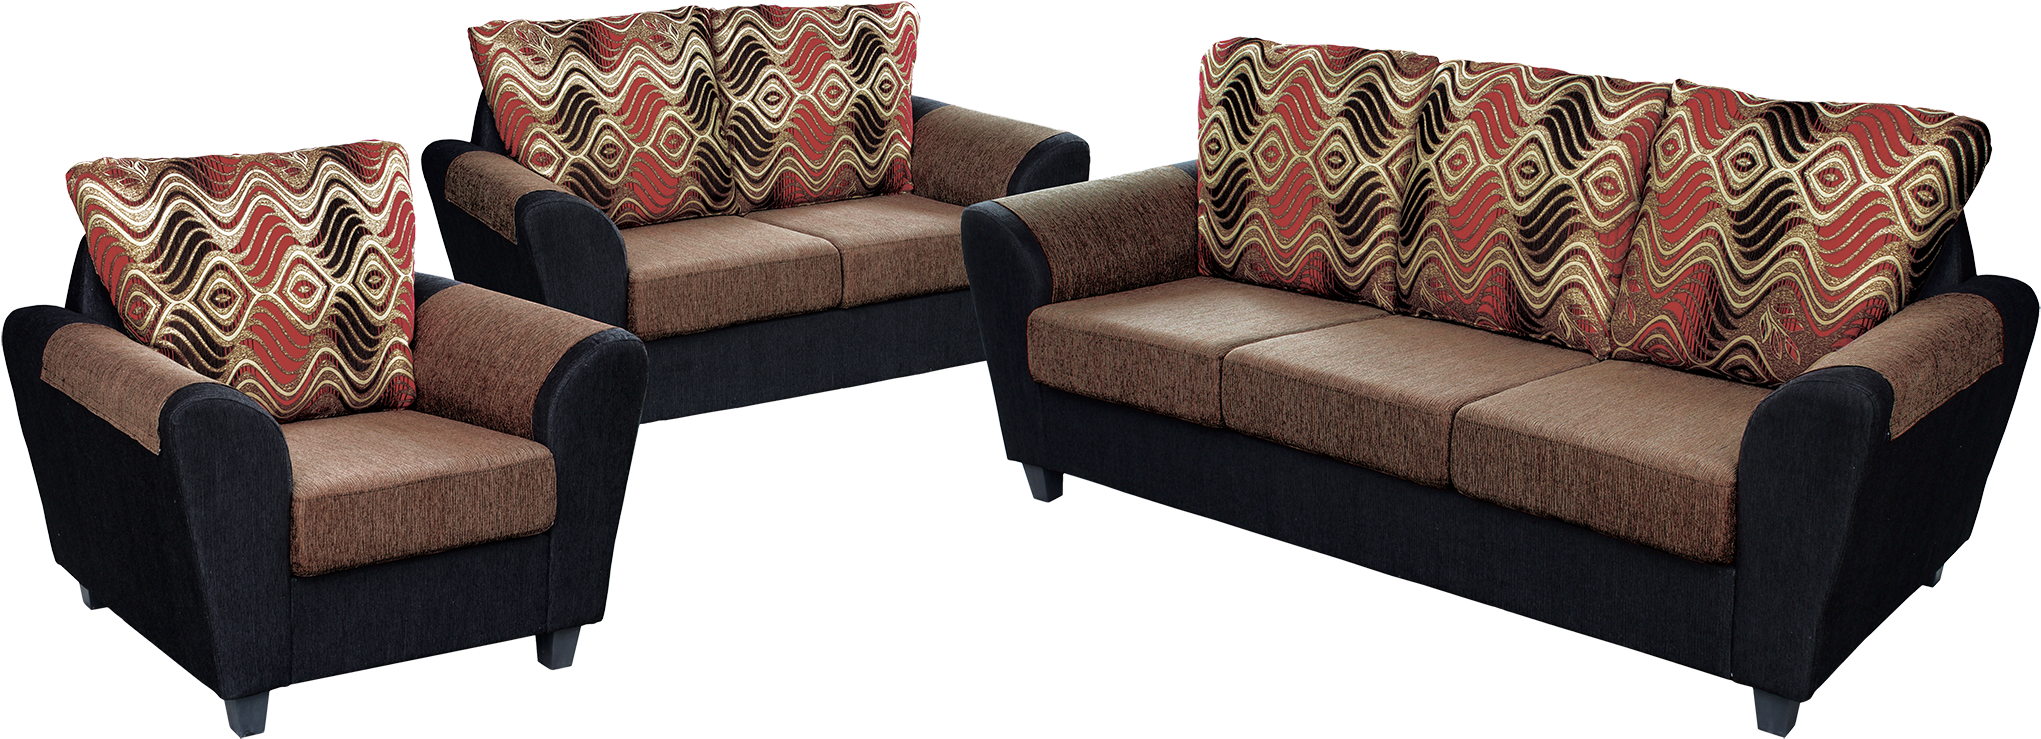 Modern Sofa Set Design